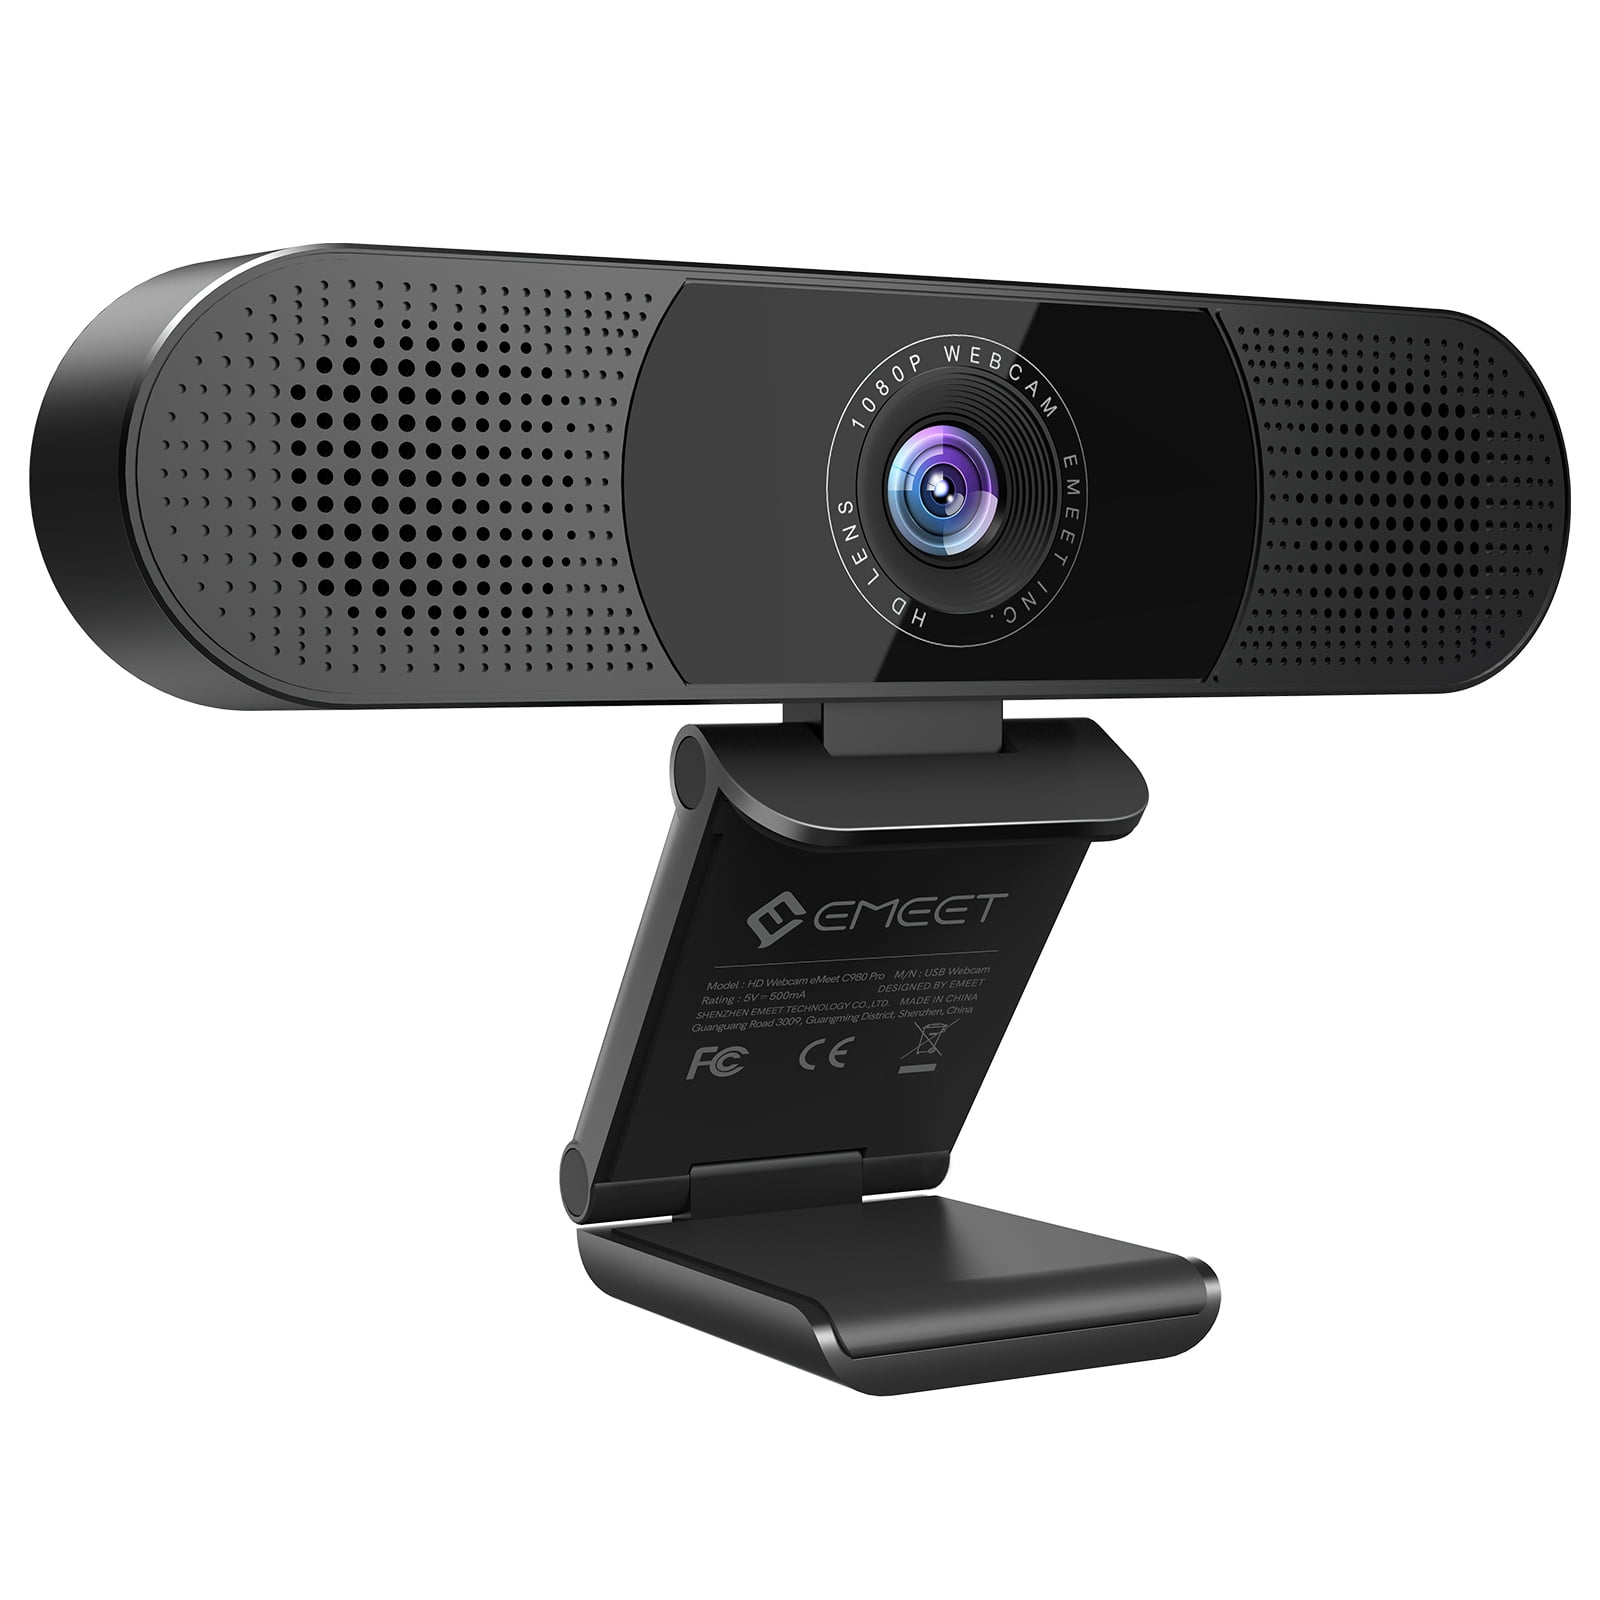 Logitech C920 HD Pro Webcam 